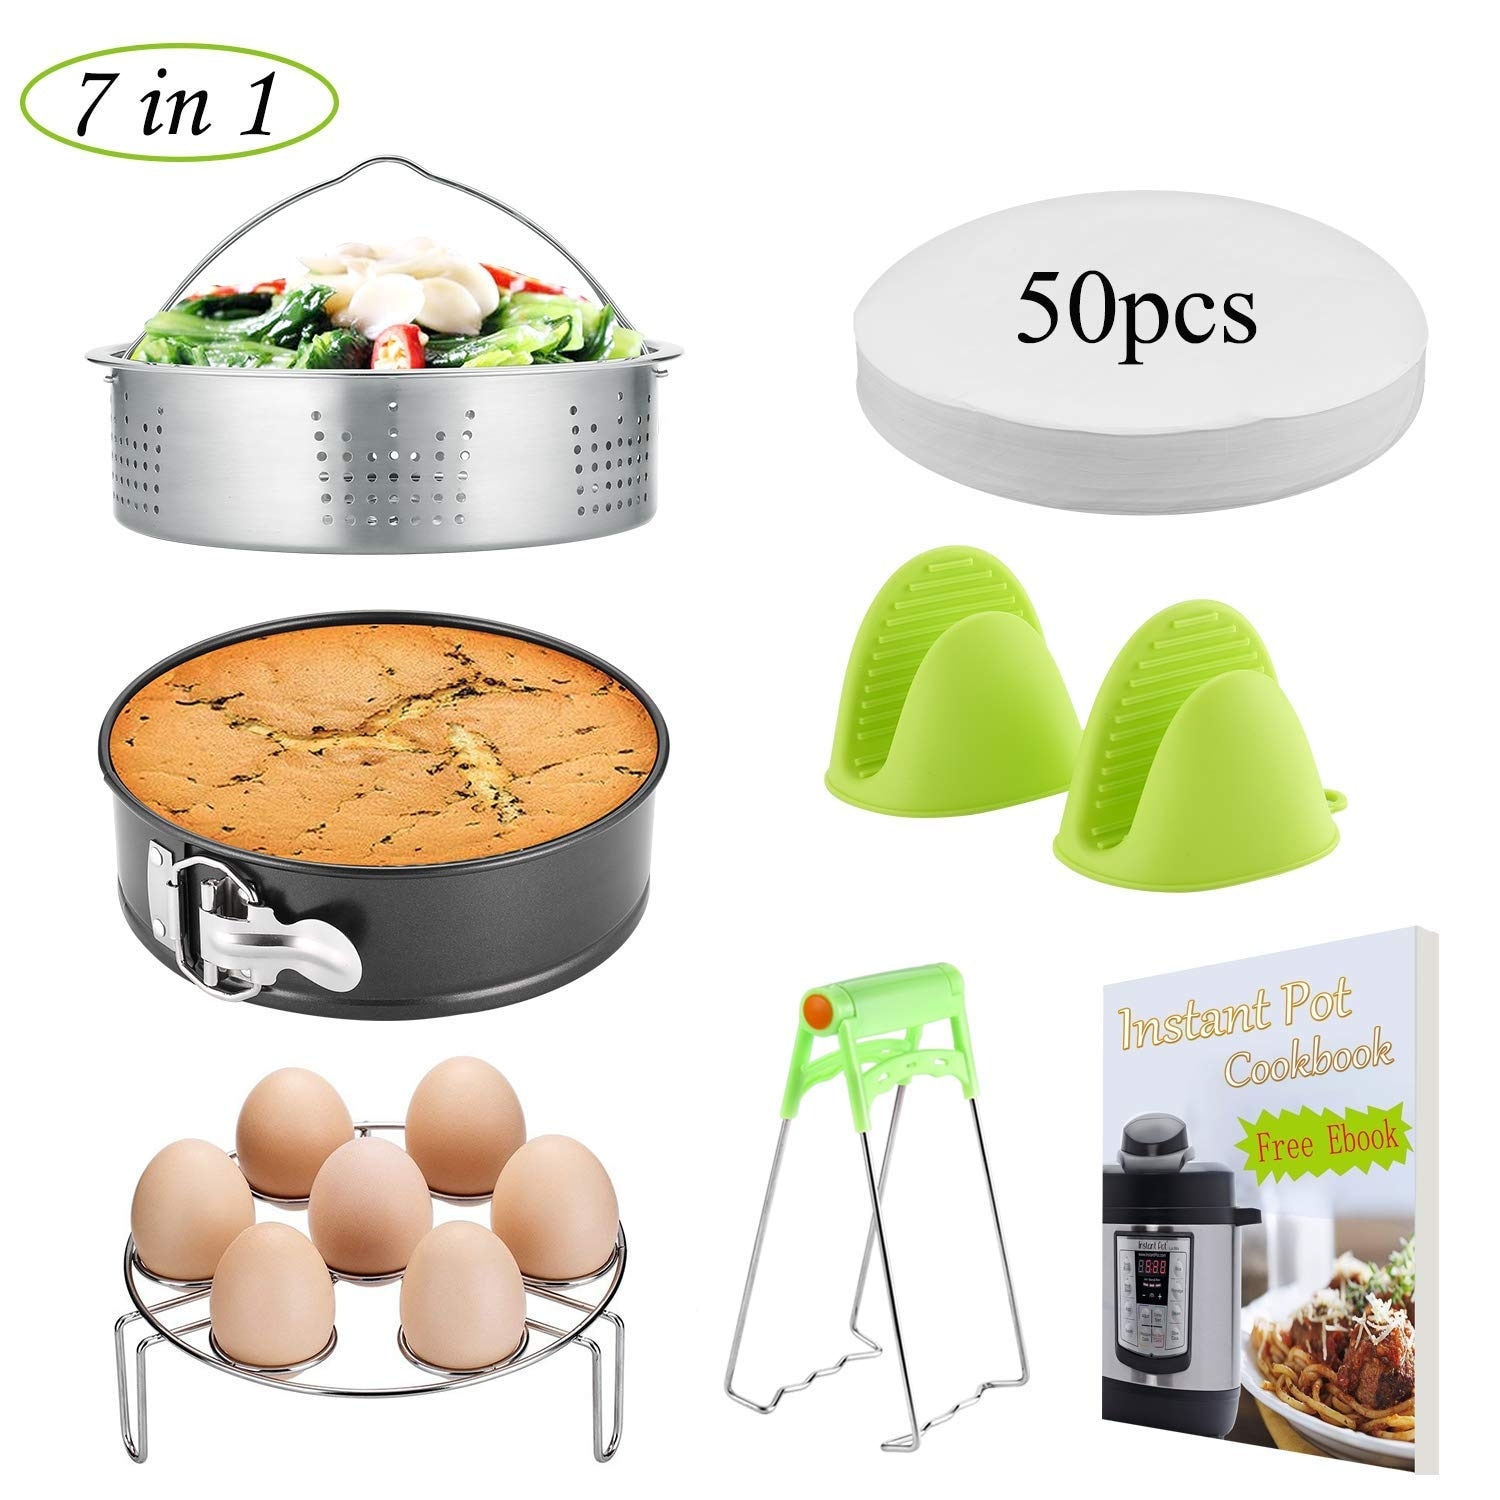 https://ak1.ostkcdn.com/images/products/is/images/direct/3d1d318eebc66d58a134373547b31e87d779581b/FITNATE-8-Pack-Cooking-Instant-Pot-Accessories-Set-Steamer-Basket-Egg-Steamer-Rack.jpg